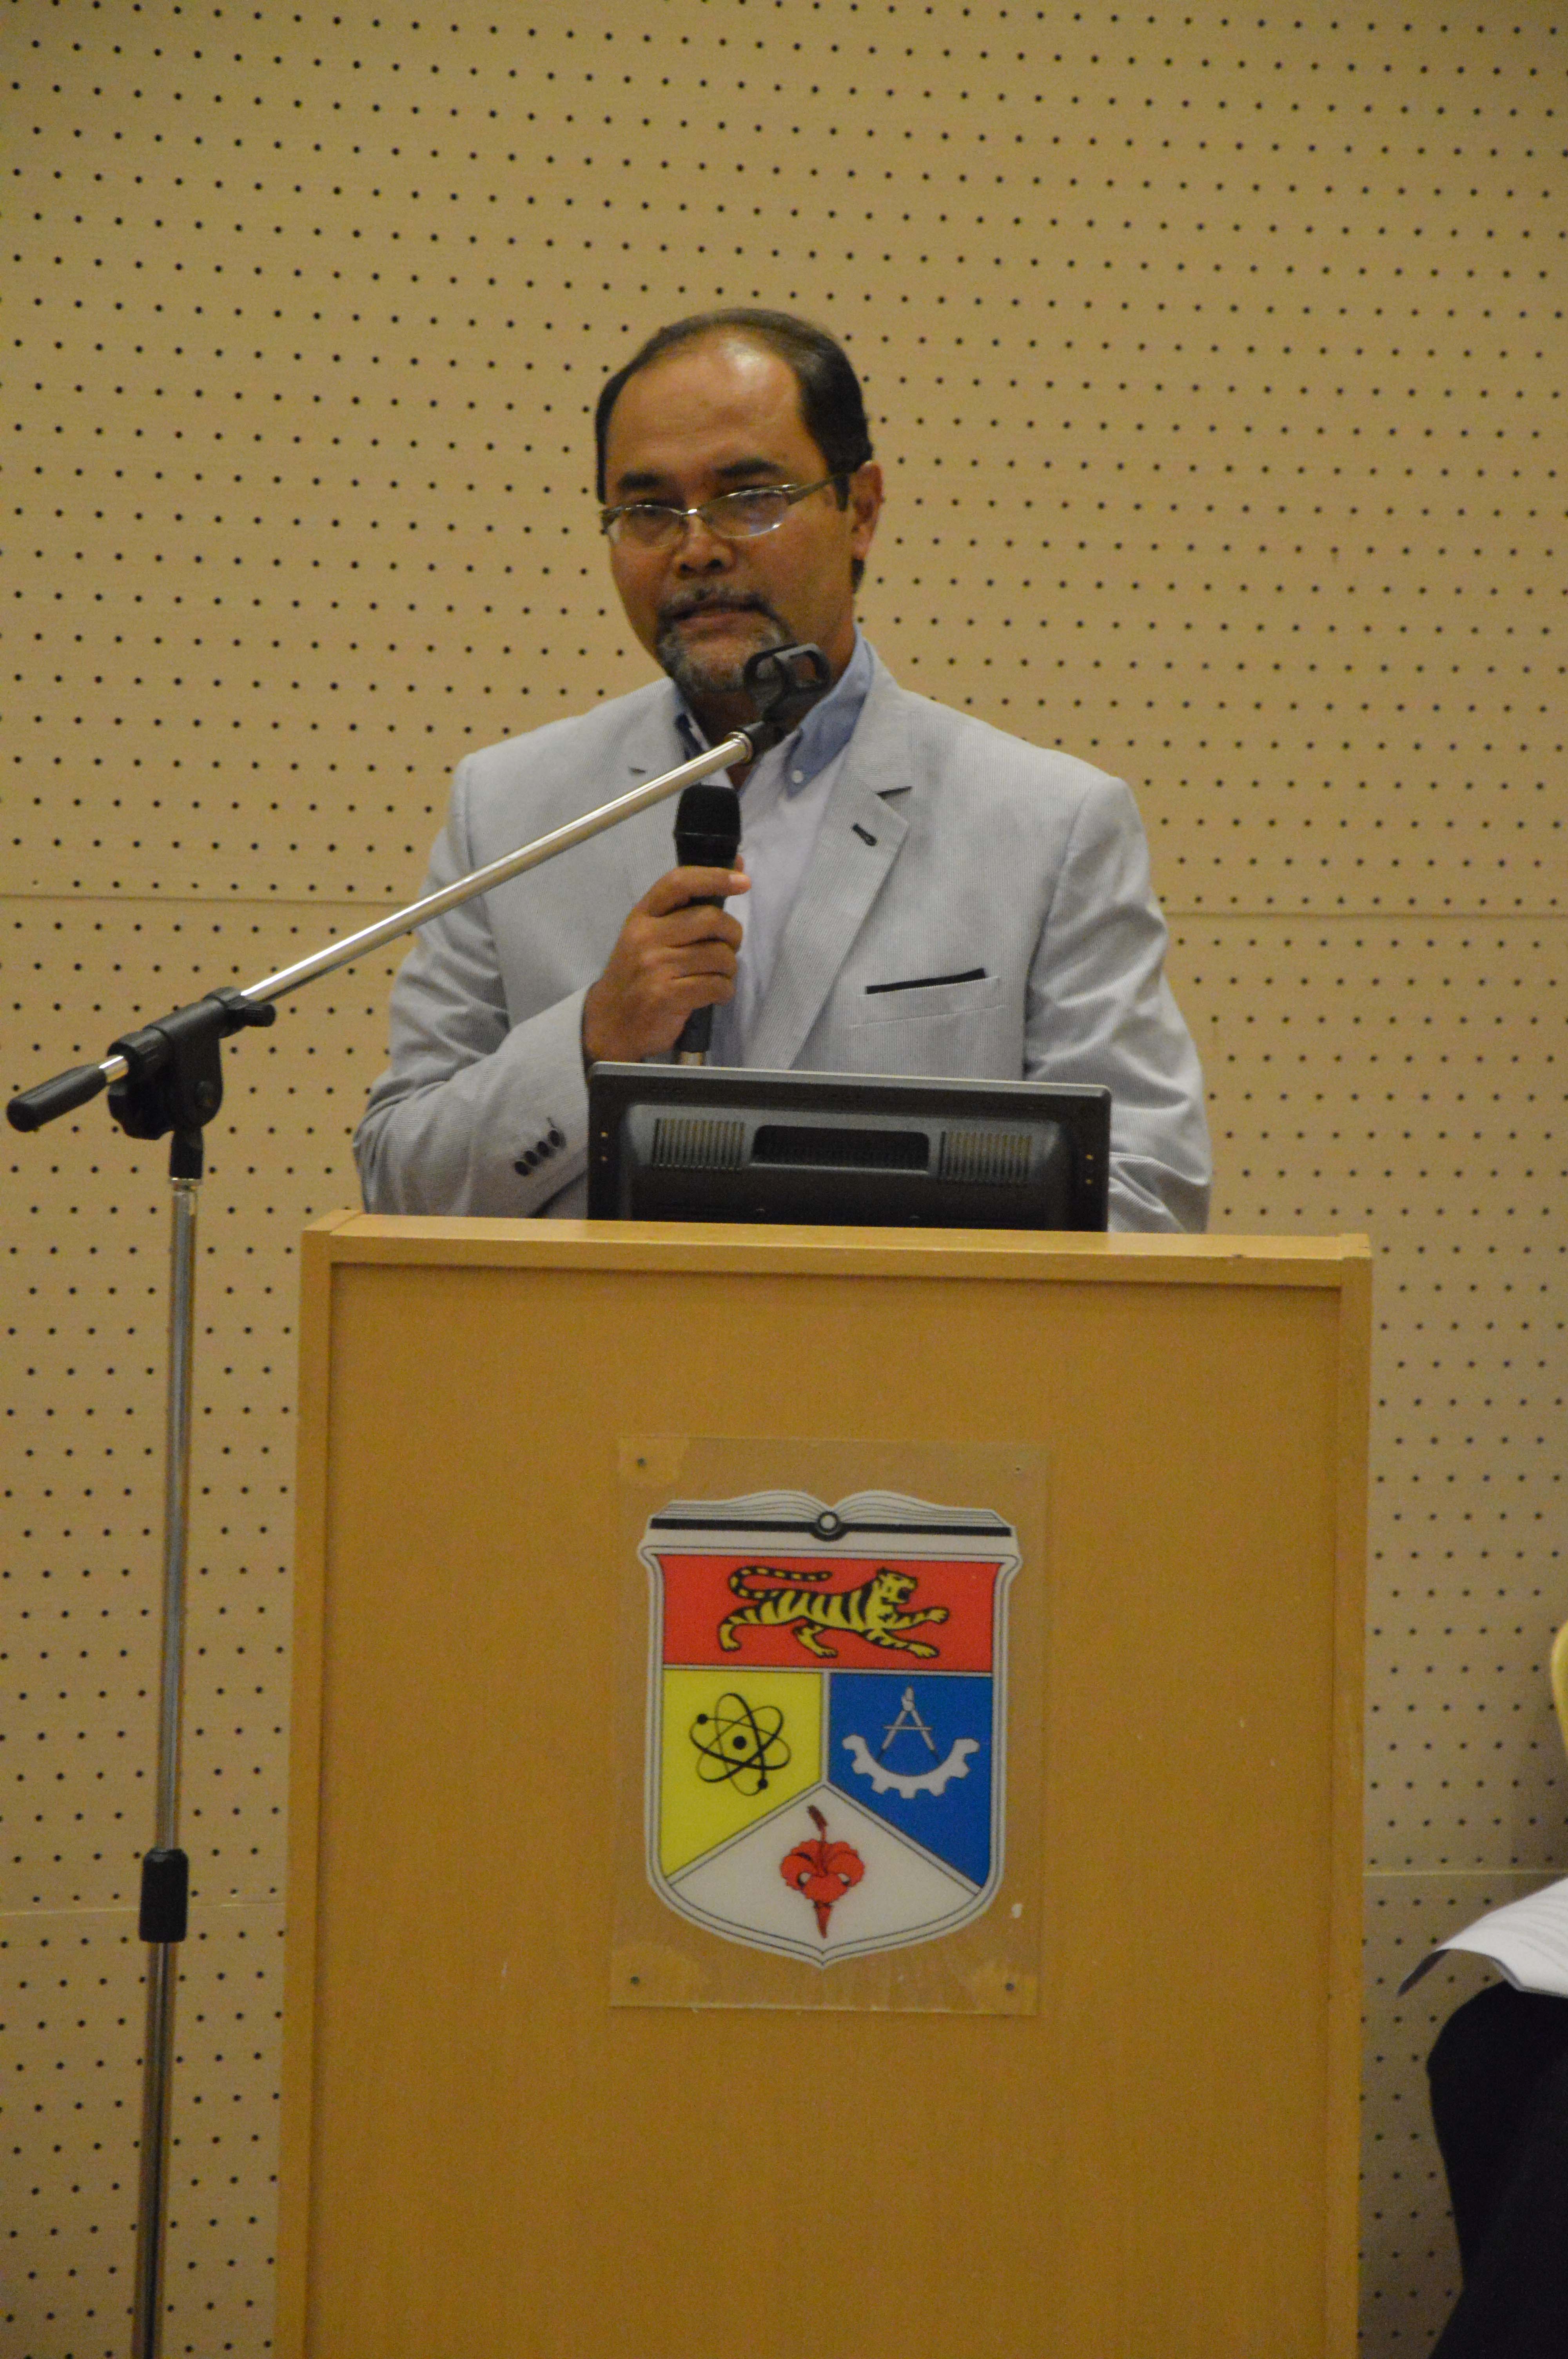 Opening ceremony speech by Prof. Dr. Ibrahim Jantan